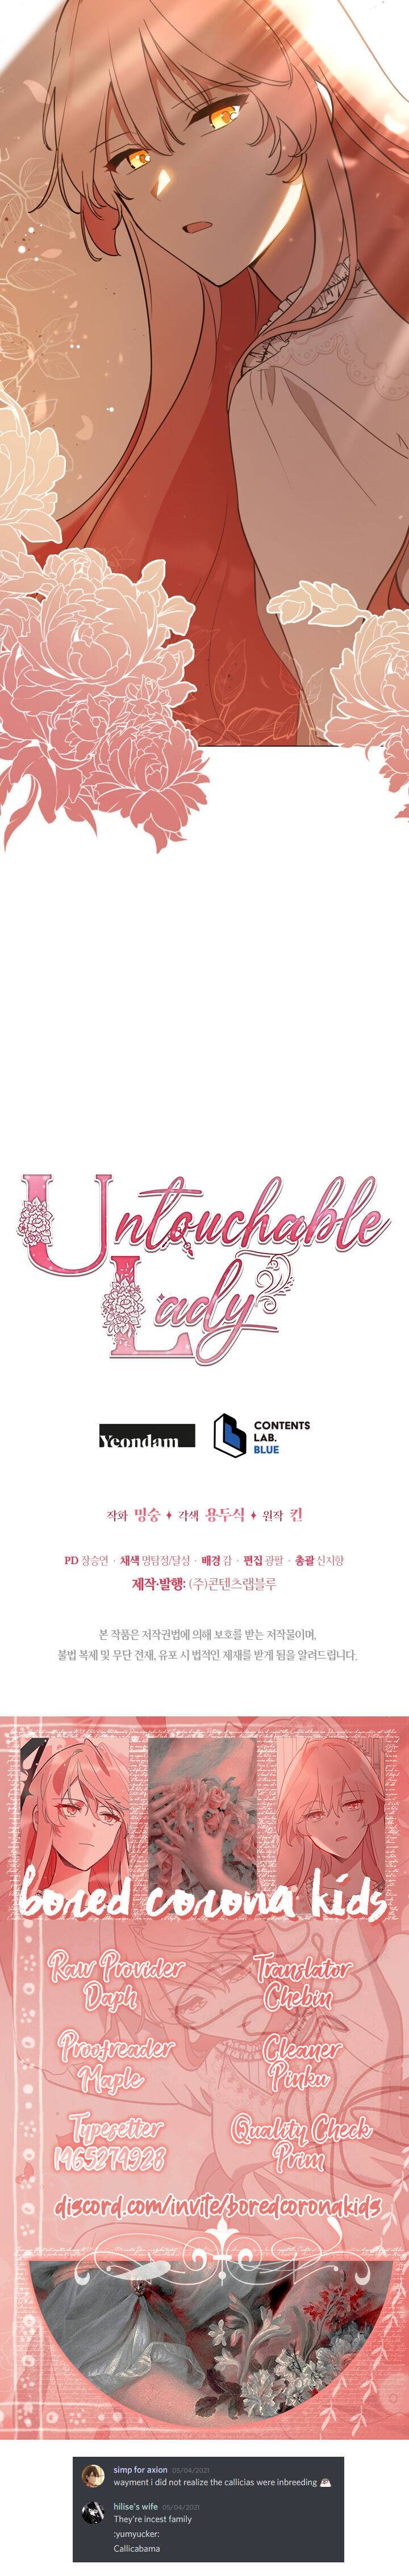 Untouchable Lady chapter 21